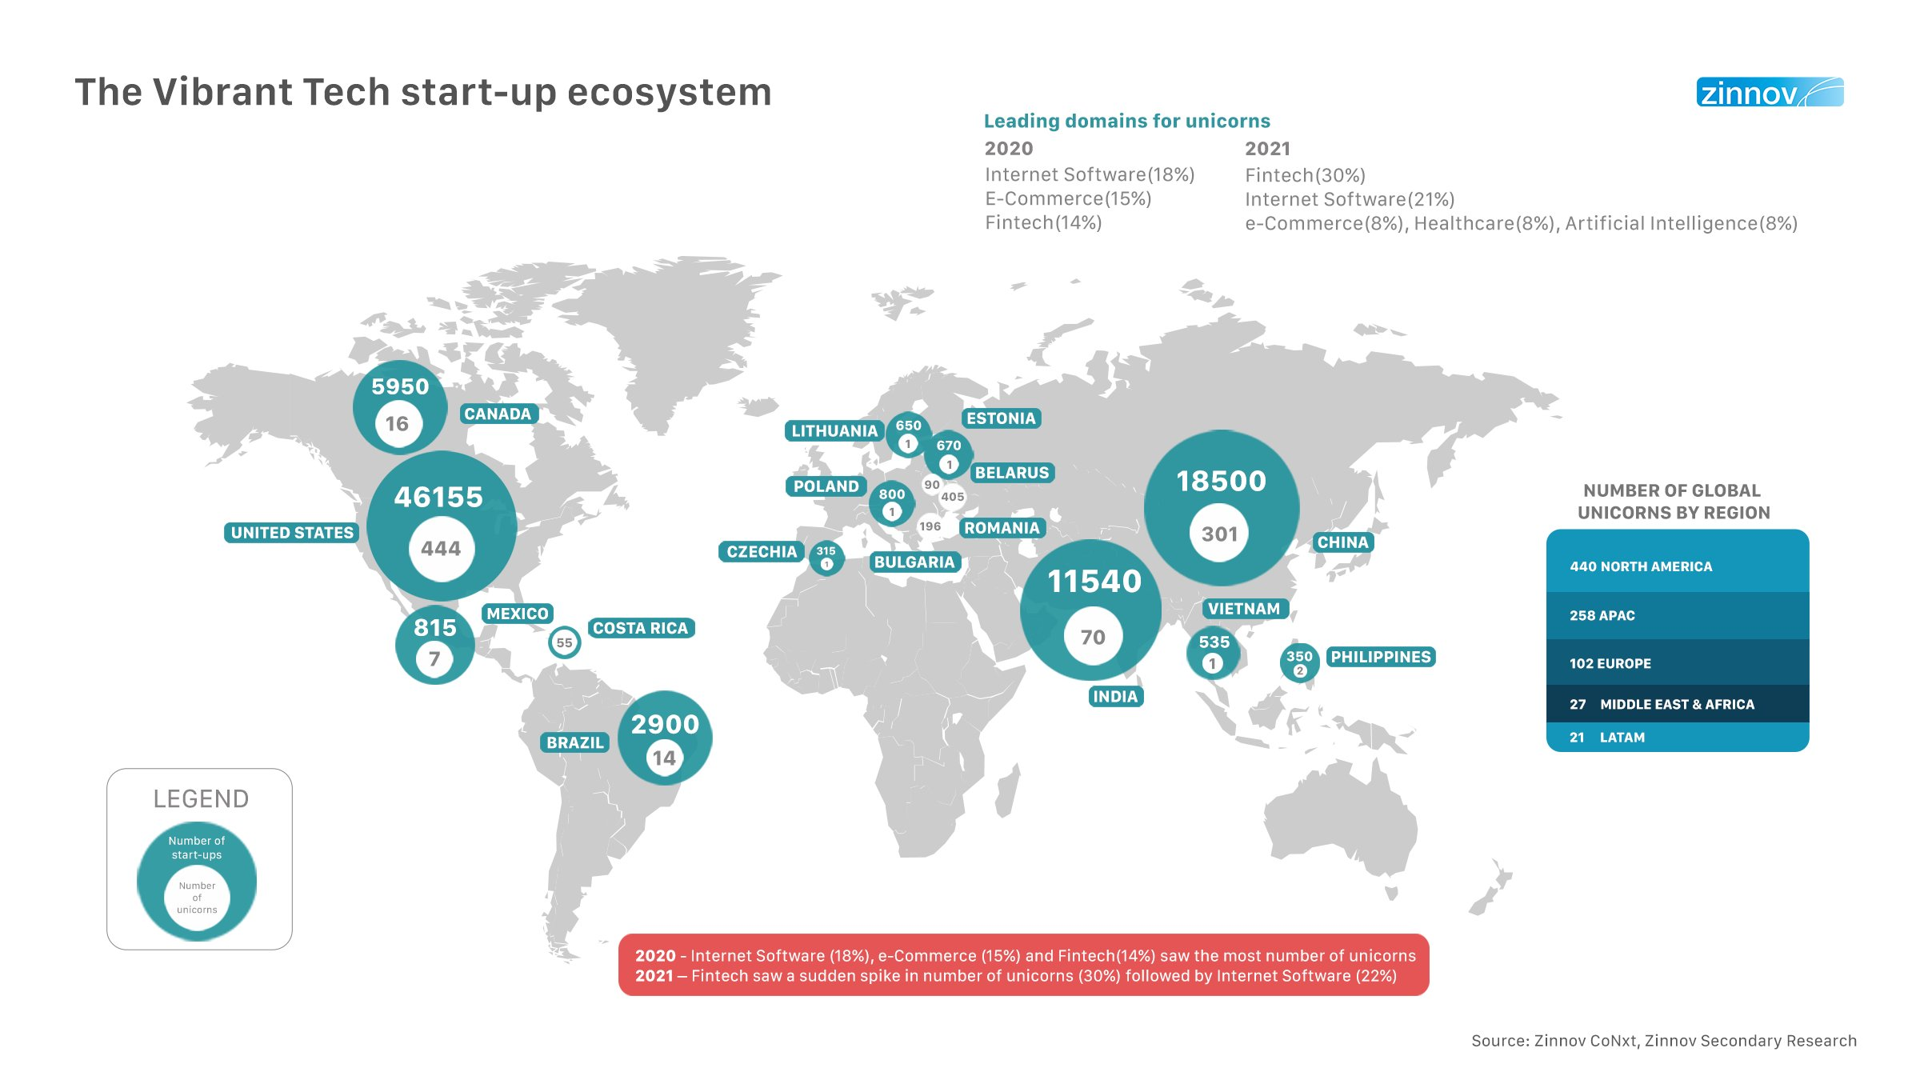 The Vibrant tech start-up ecosystem